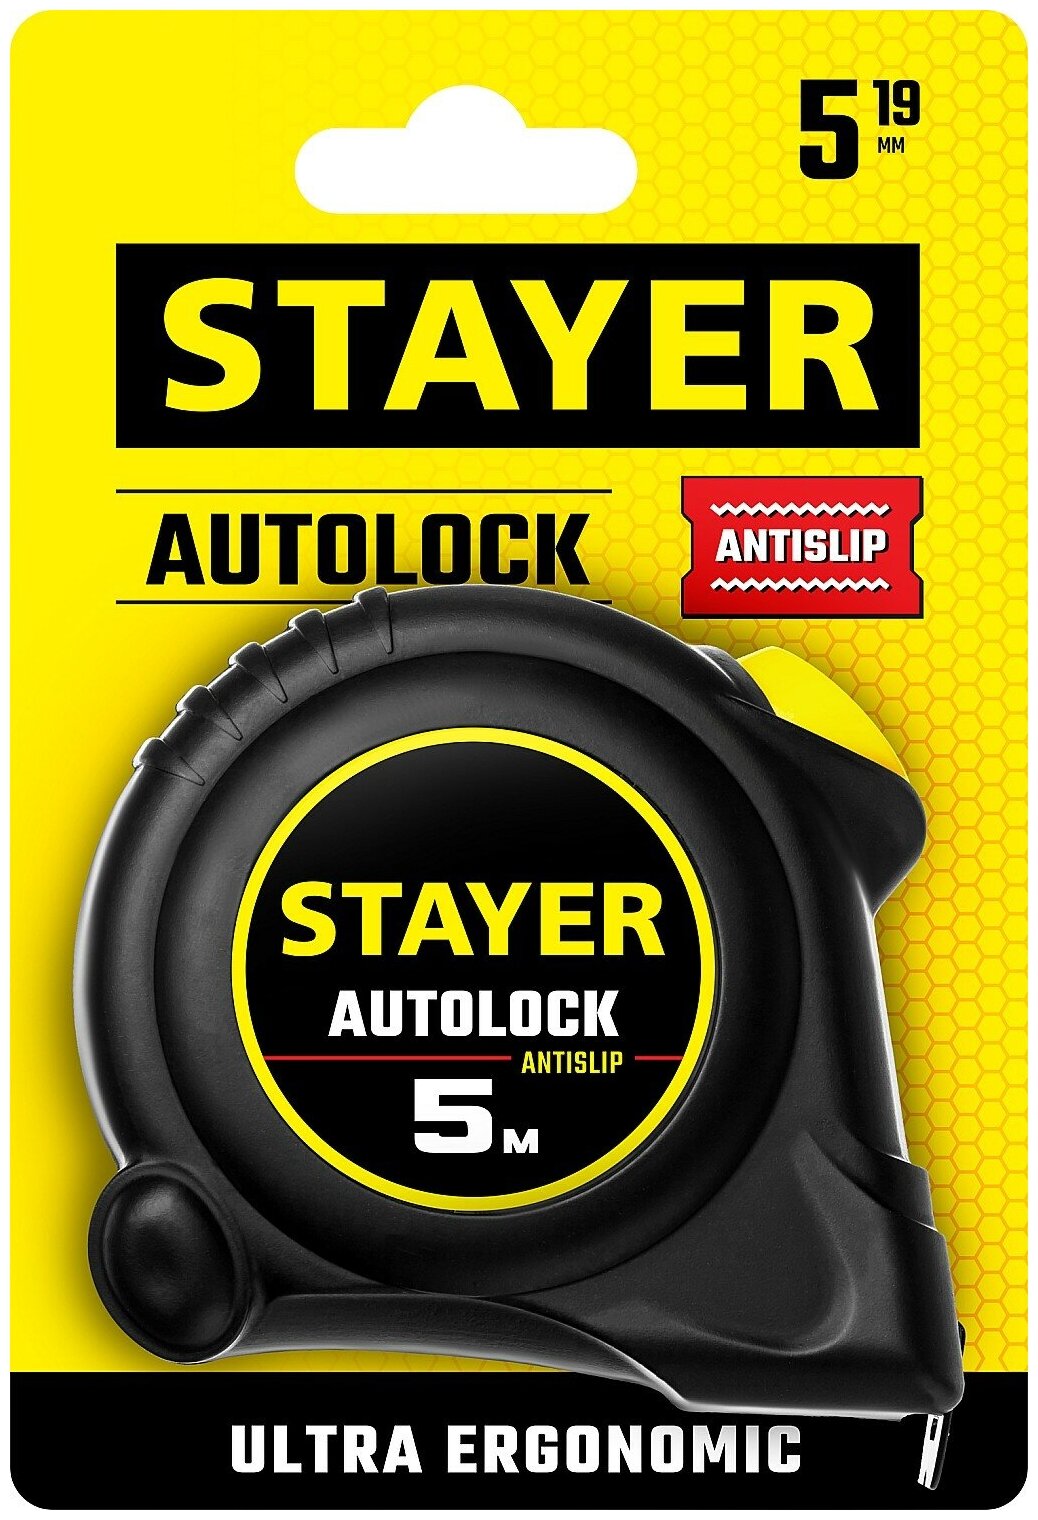 STAYER АutoLock 5м / 19мм рулетка с автостопом - фотография № 8